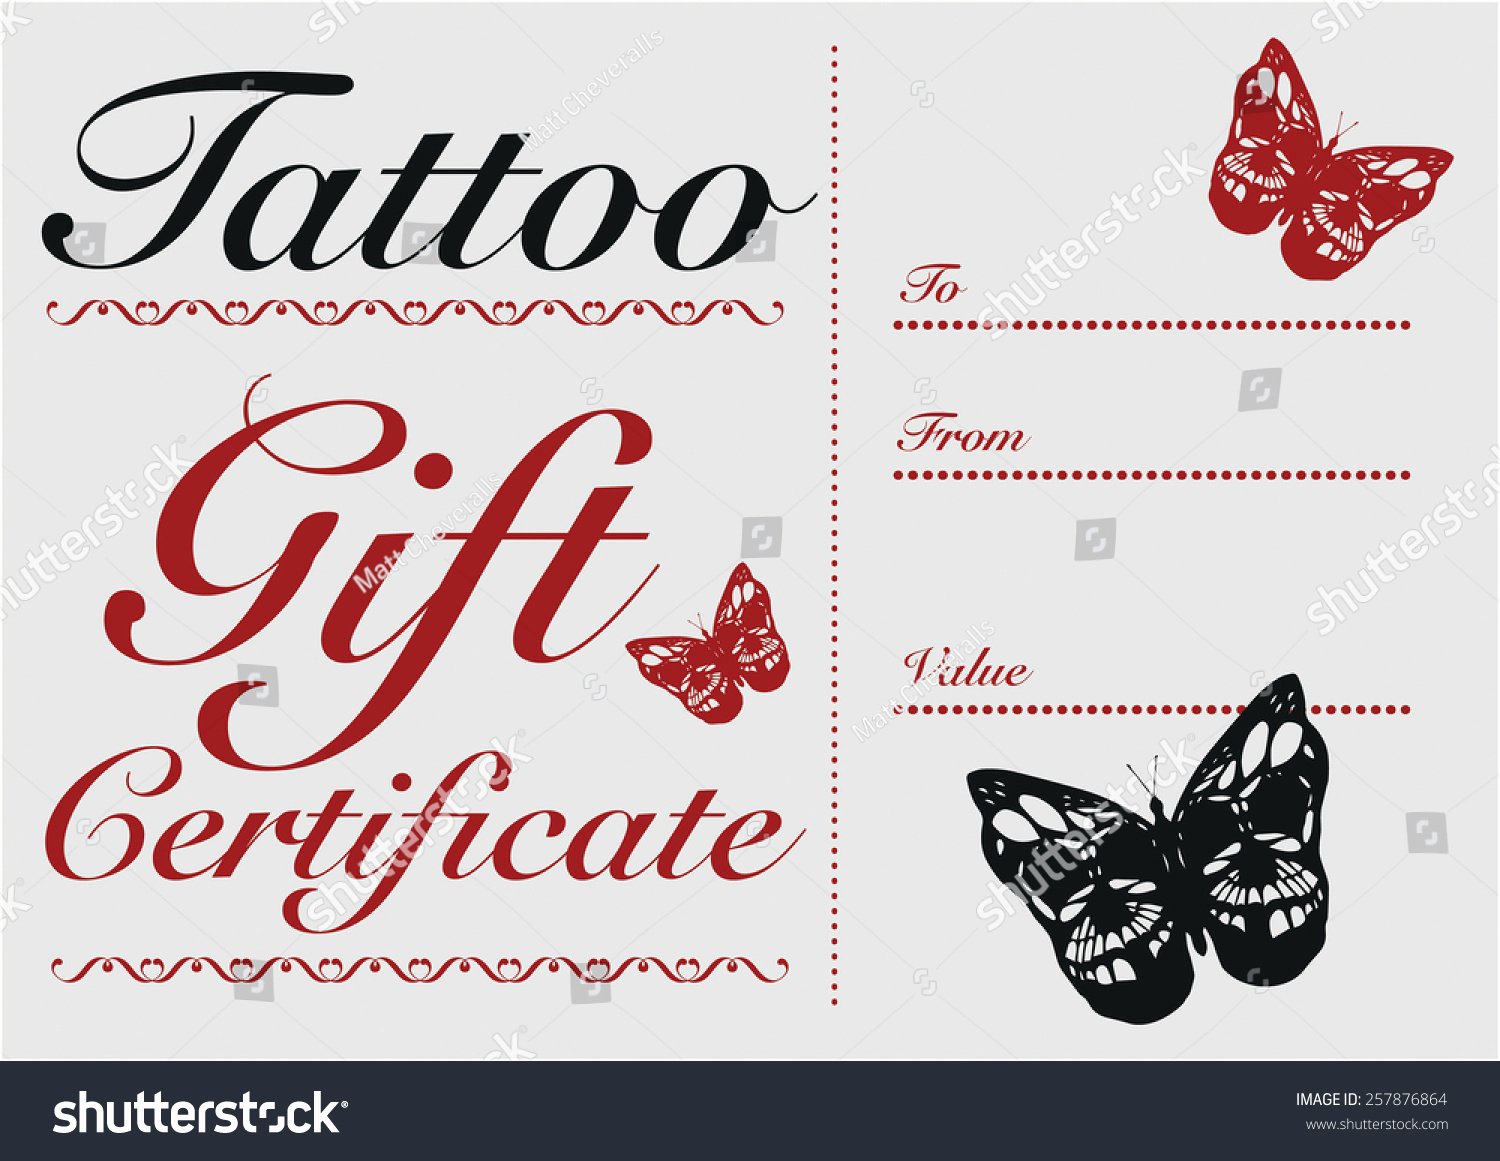 Tattoo Gift Certificate Template Free Fresh Tattoo Gift Certificate Template Free